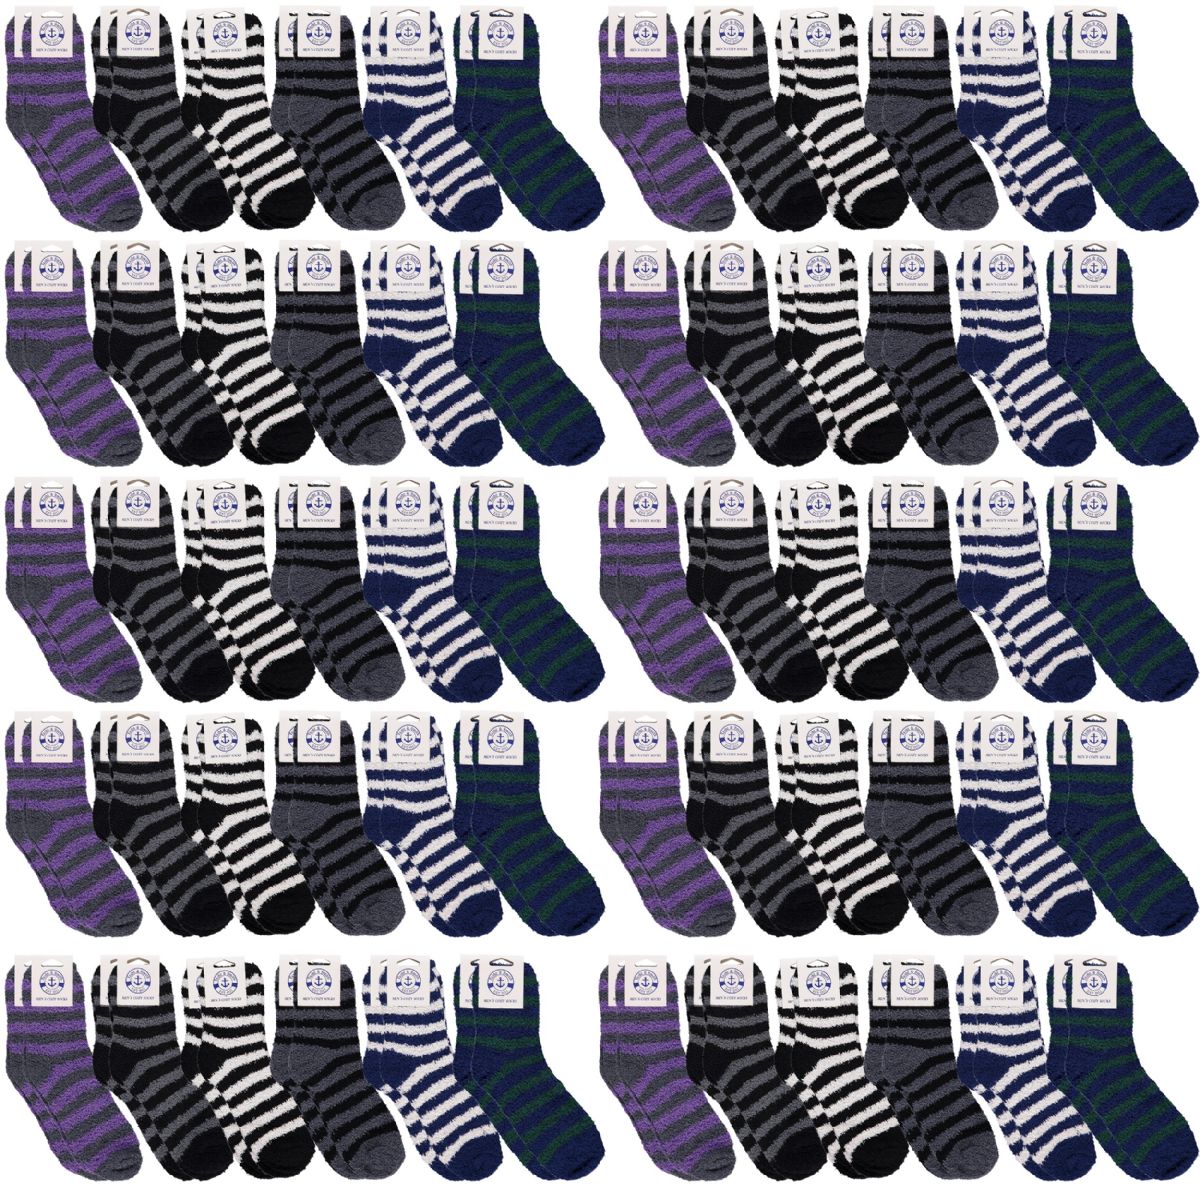 60 Pieces of Men's Fuzzy Socks Striped Super Soft Warm